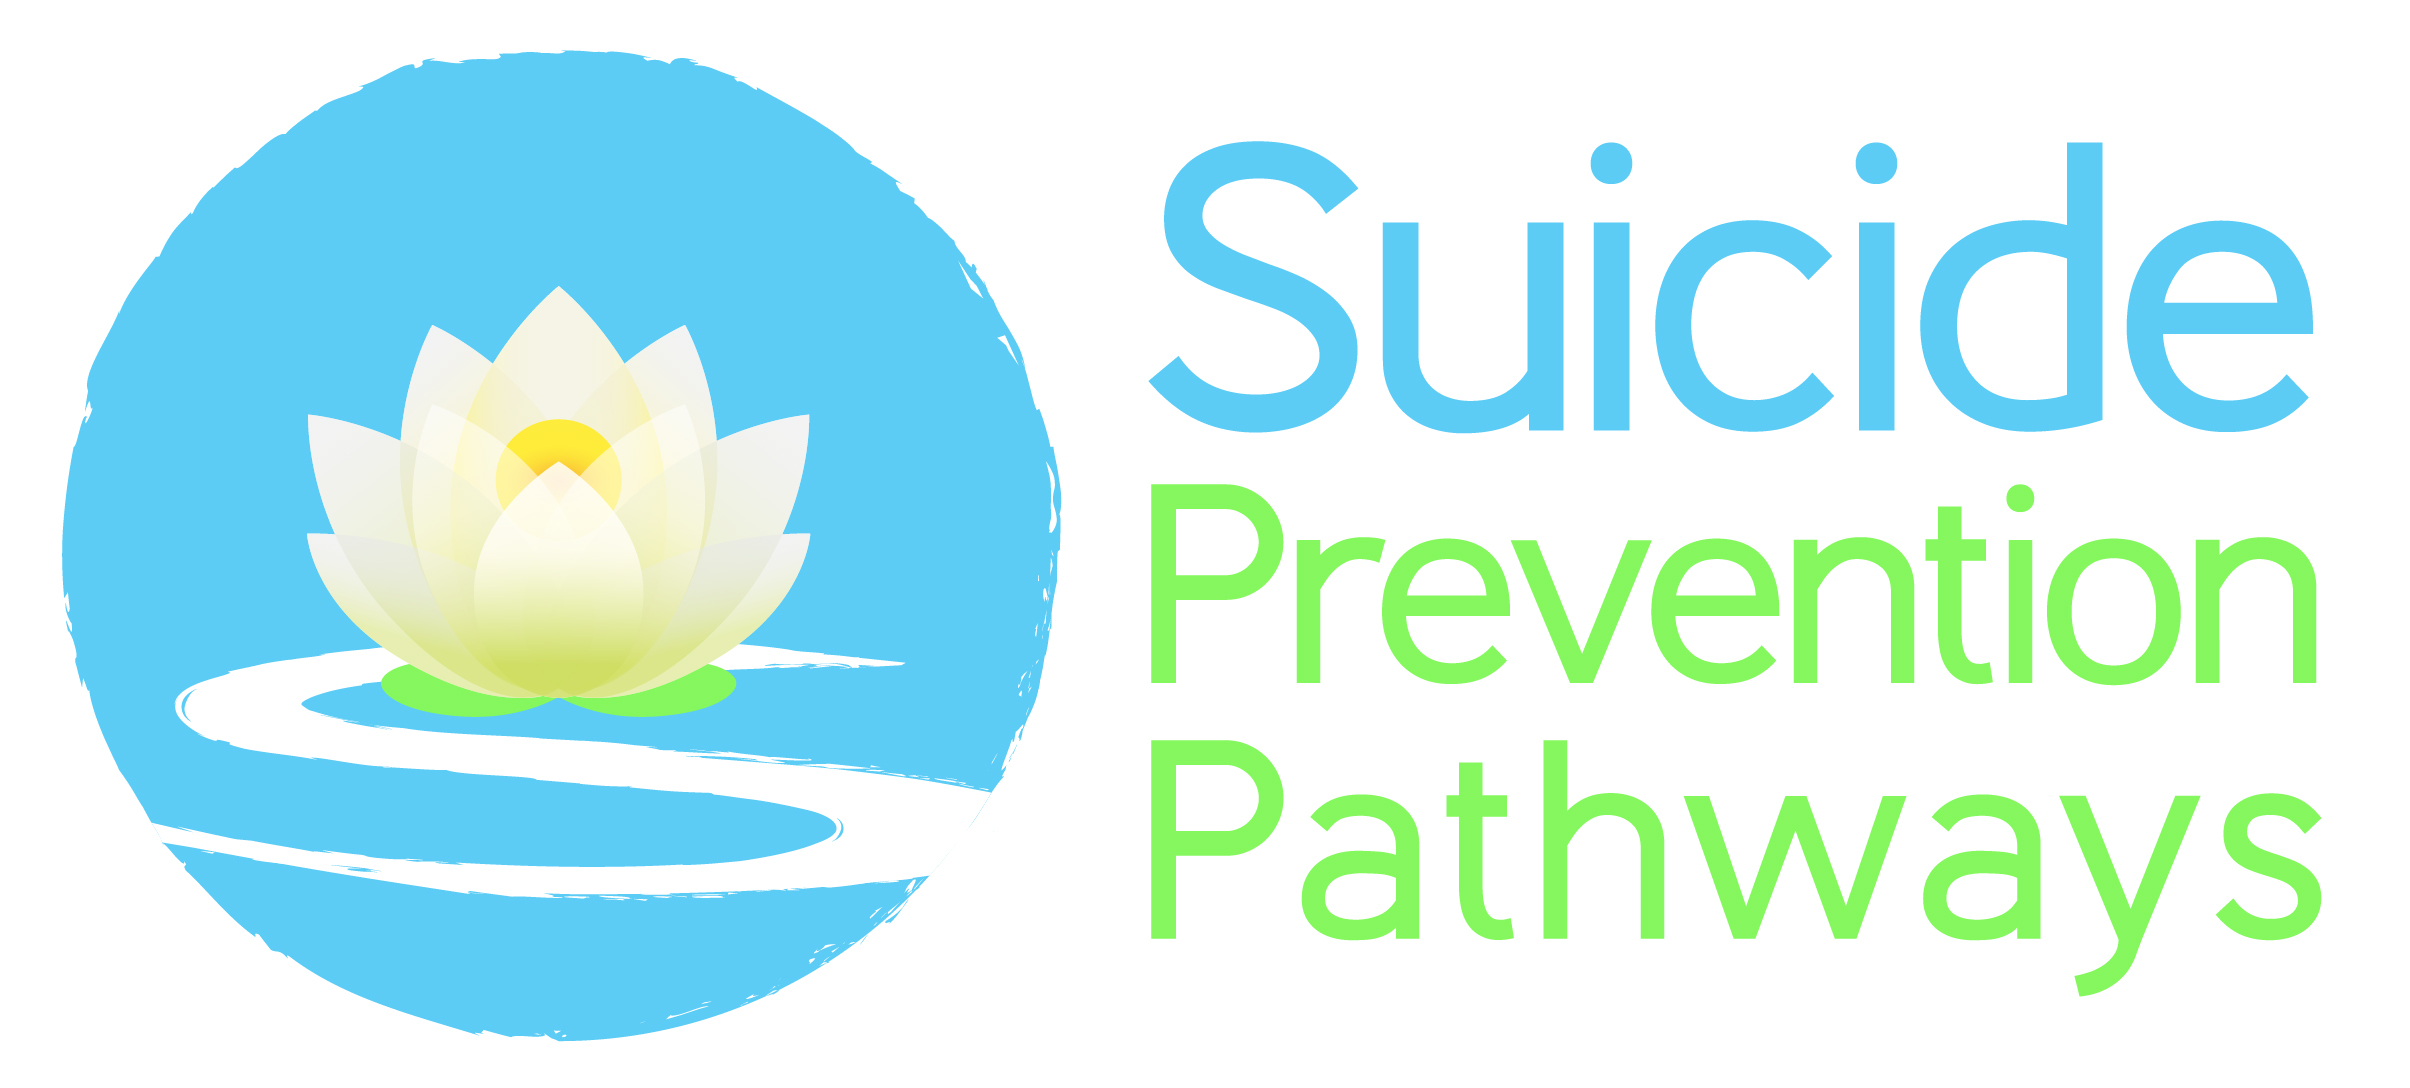 Suicide Prevention Pathways Inc. logo